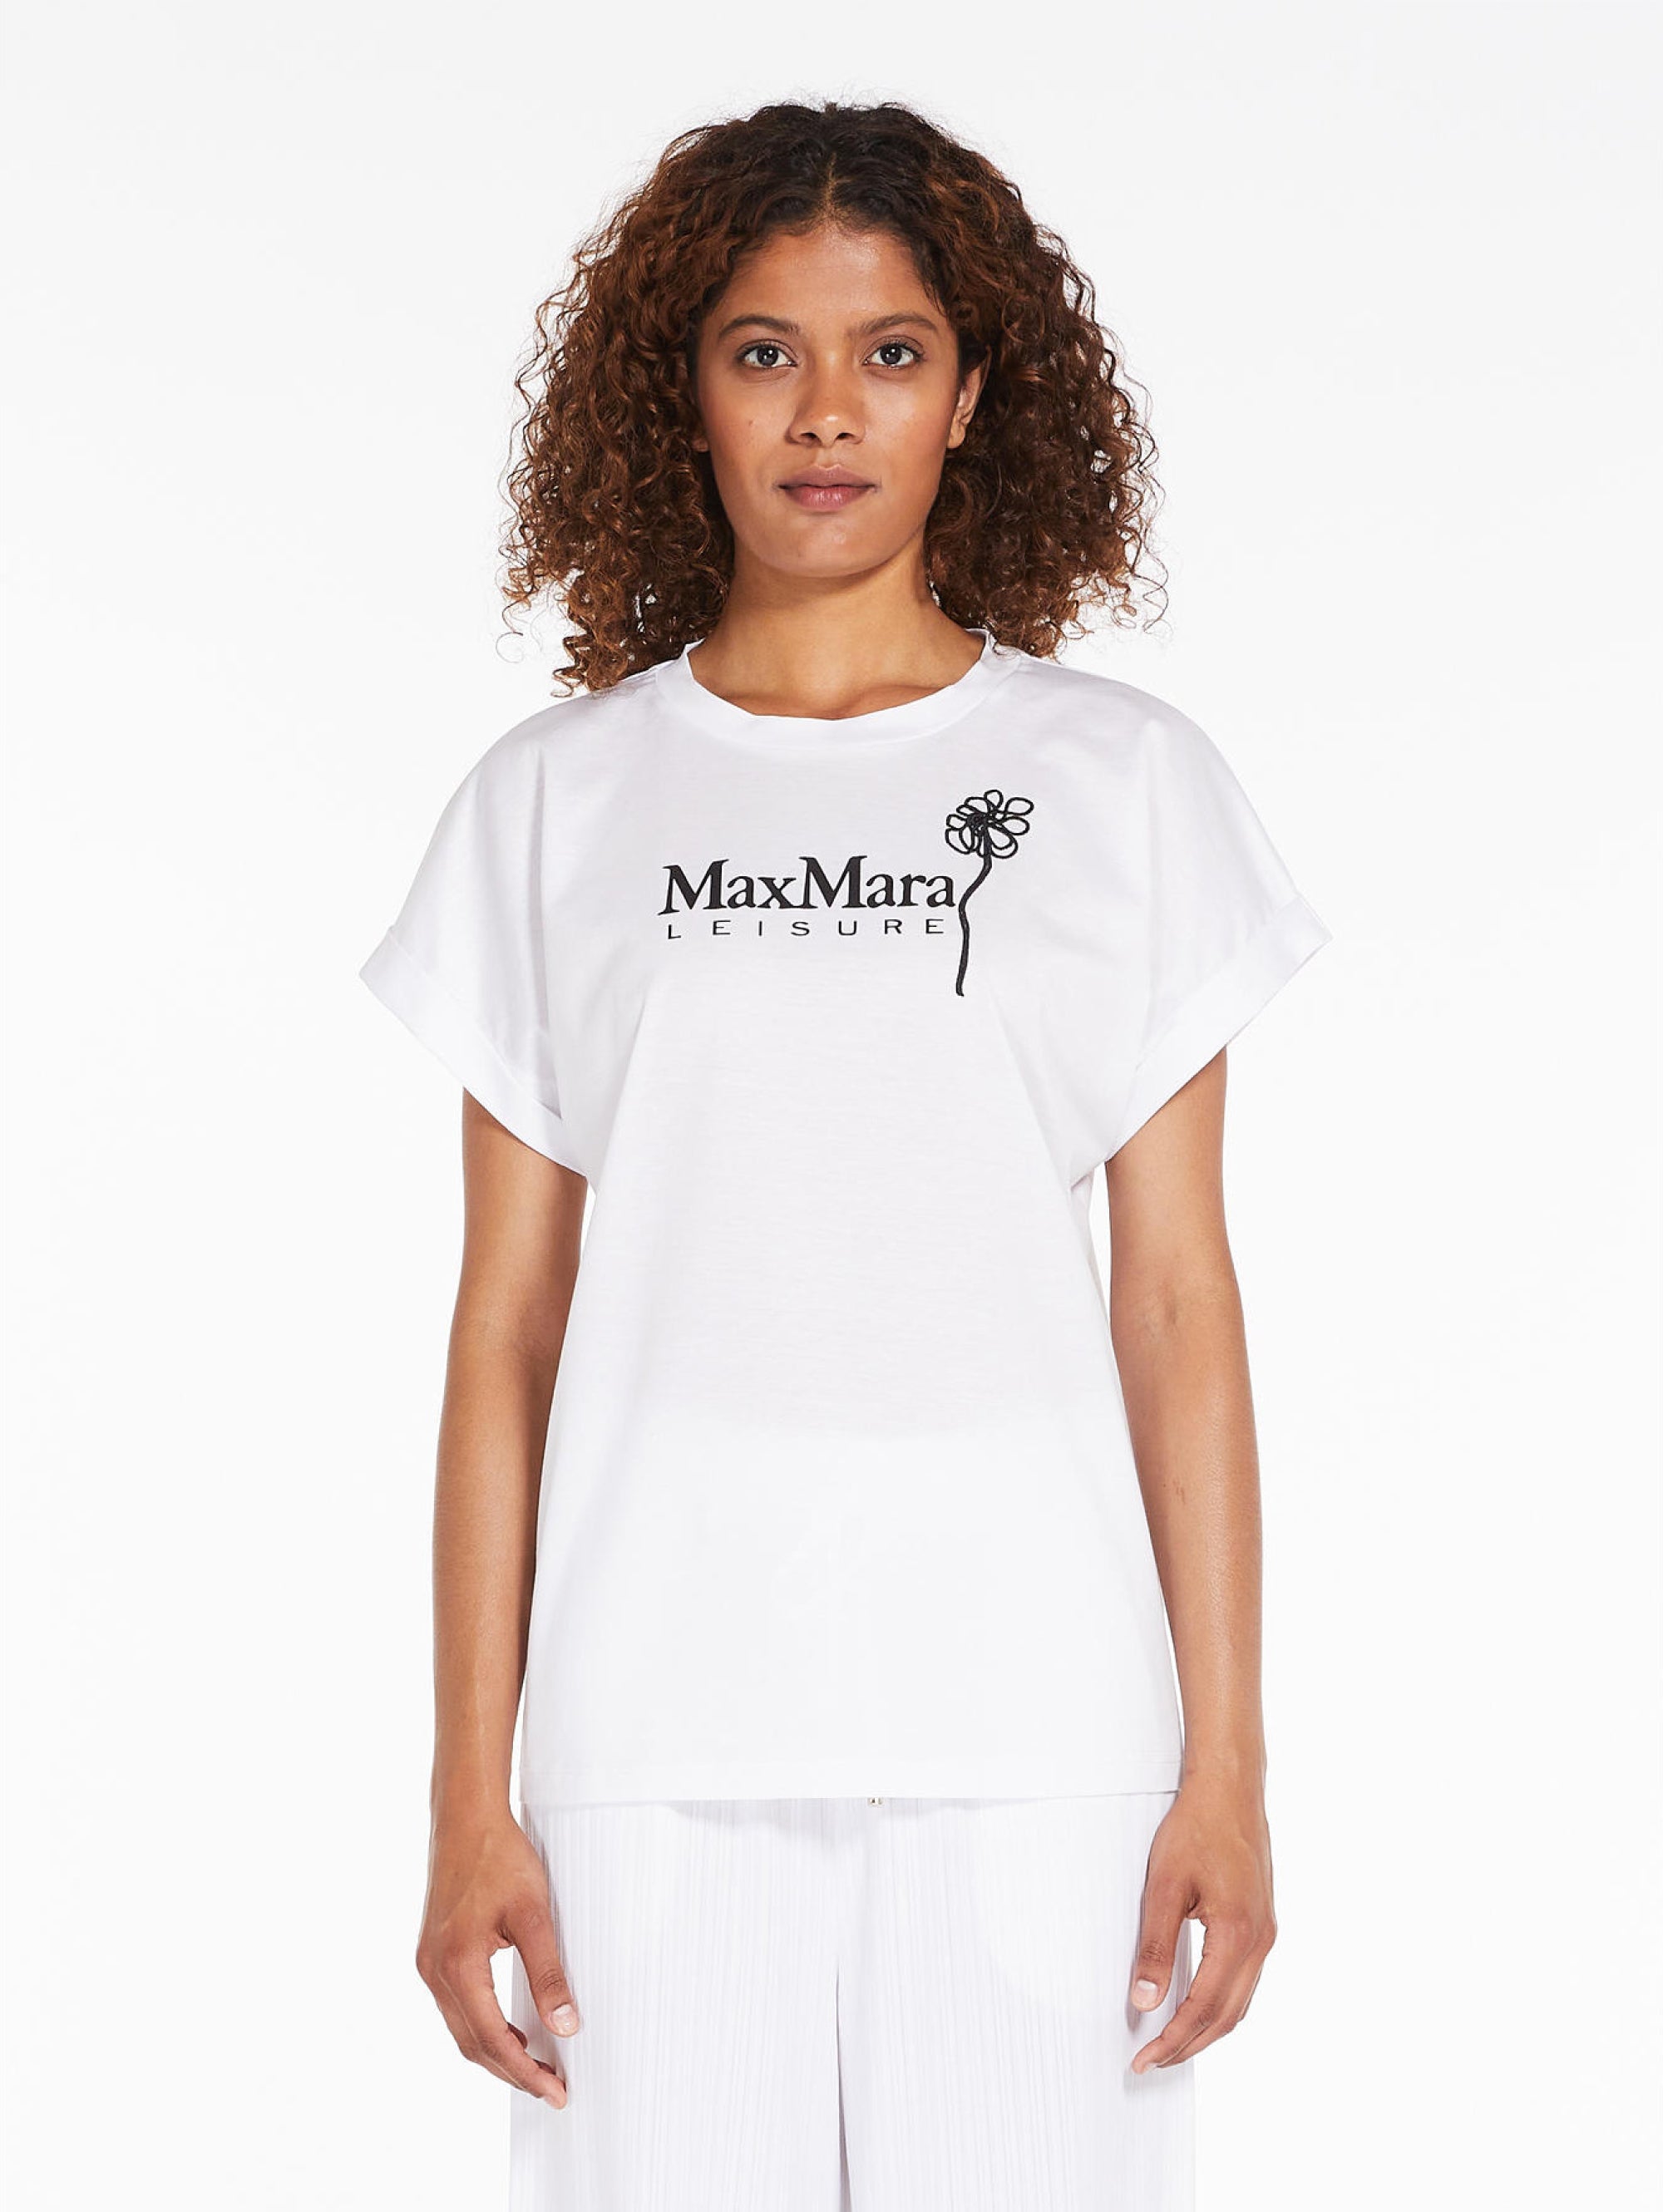 MAX MARA LEISURE-T-shirt con Macro Stampa Bianco-TRYME Shop